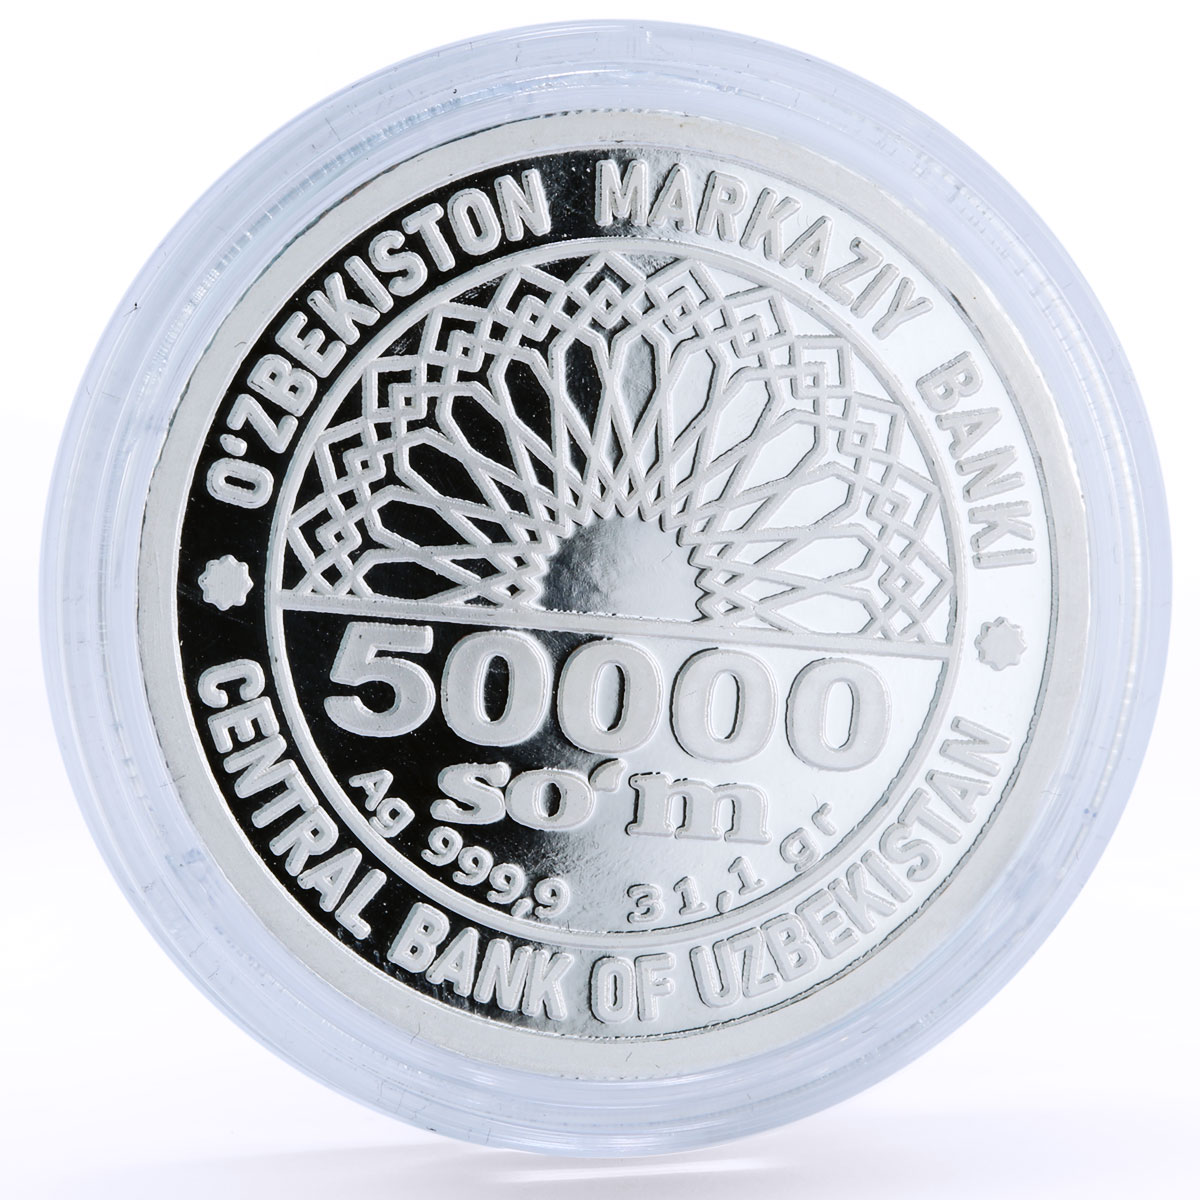 Uzbekistan 50000 som National Independence Day Folk Ornament silver coin 2021